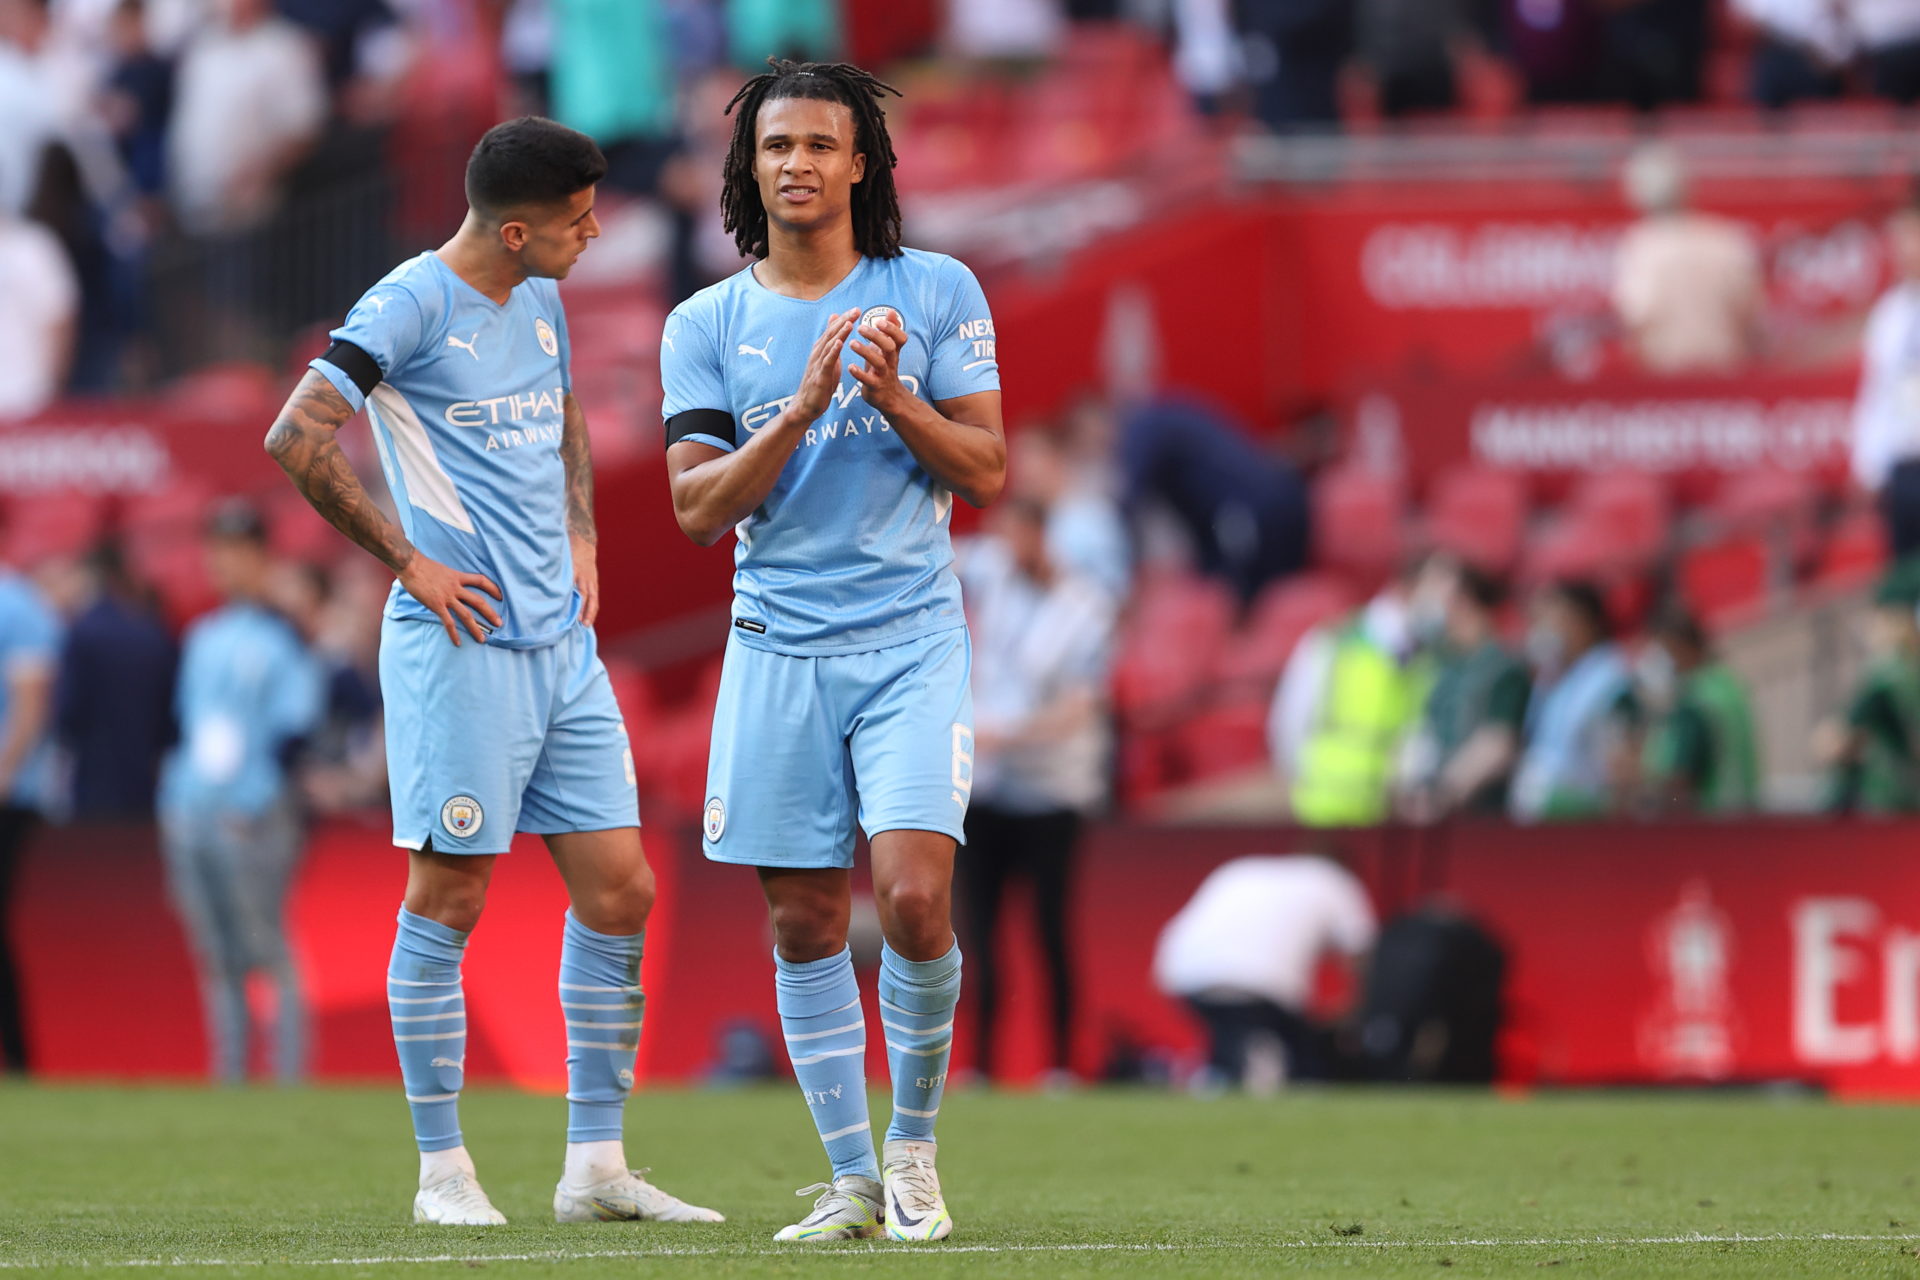 Manchester City v Liverpool: The Emirates FA Cup Semi-Final